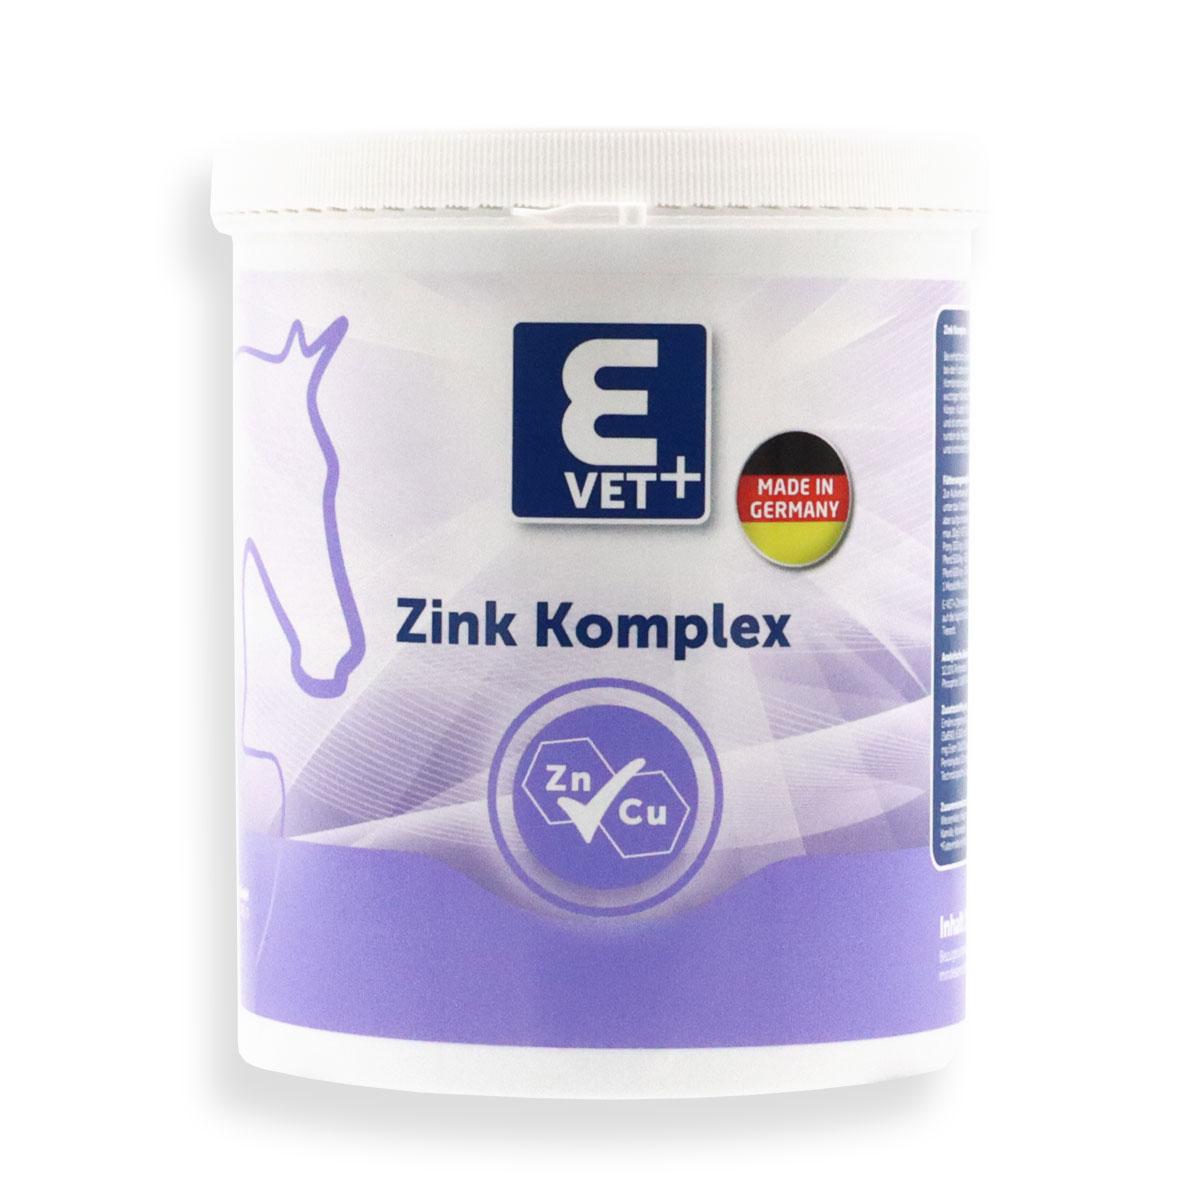 Eggersmann E VET+ Zink Komplex 1 kg